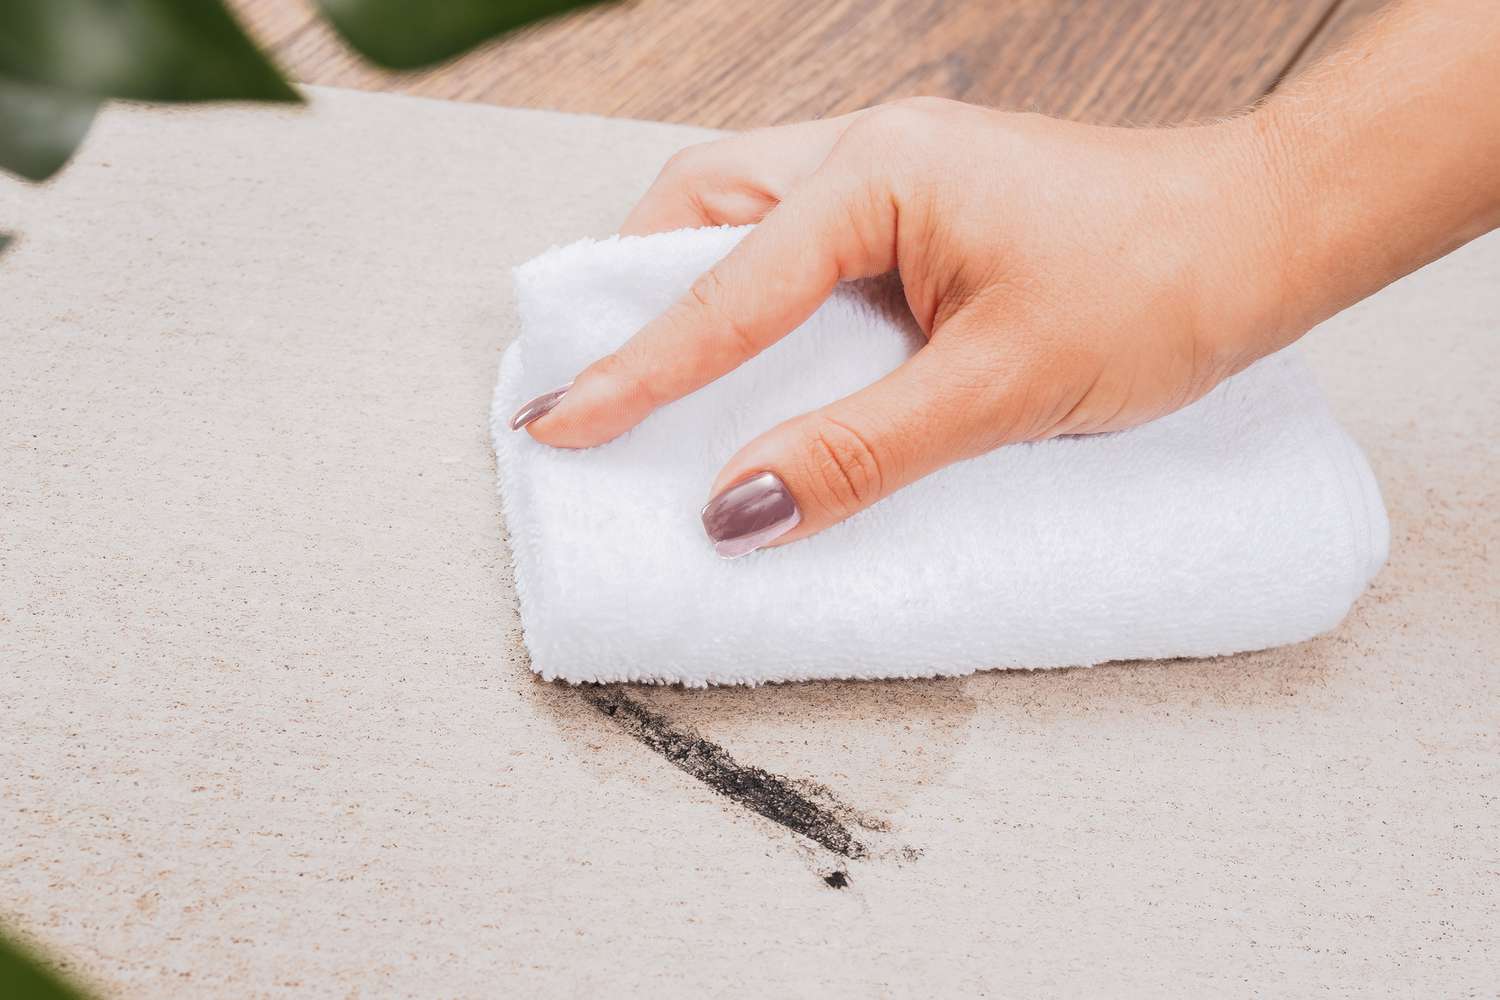 blotting mascara stains from carpet